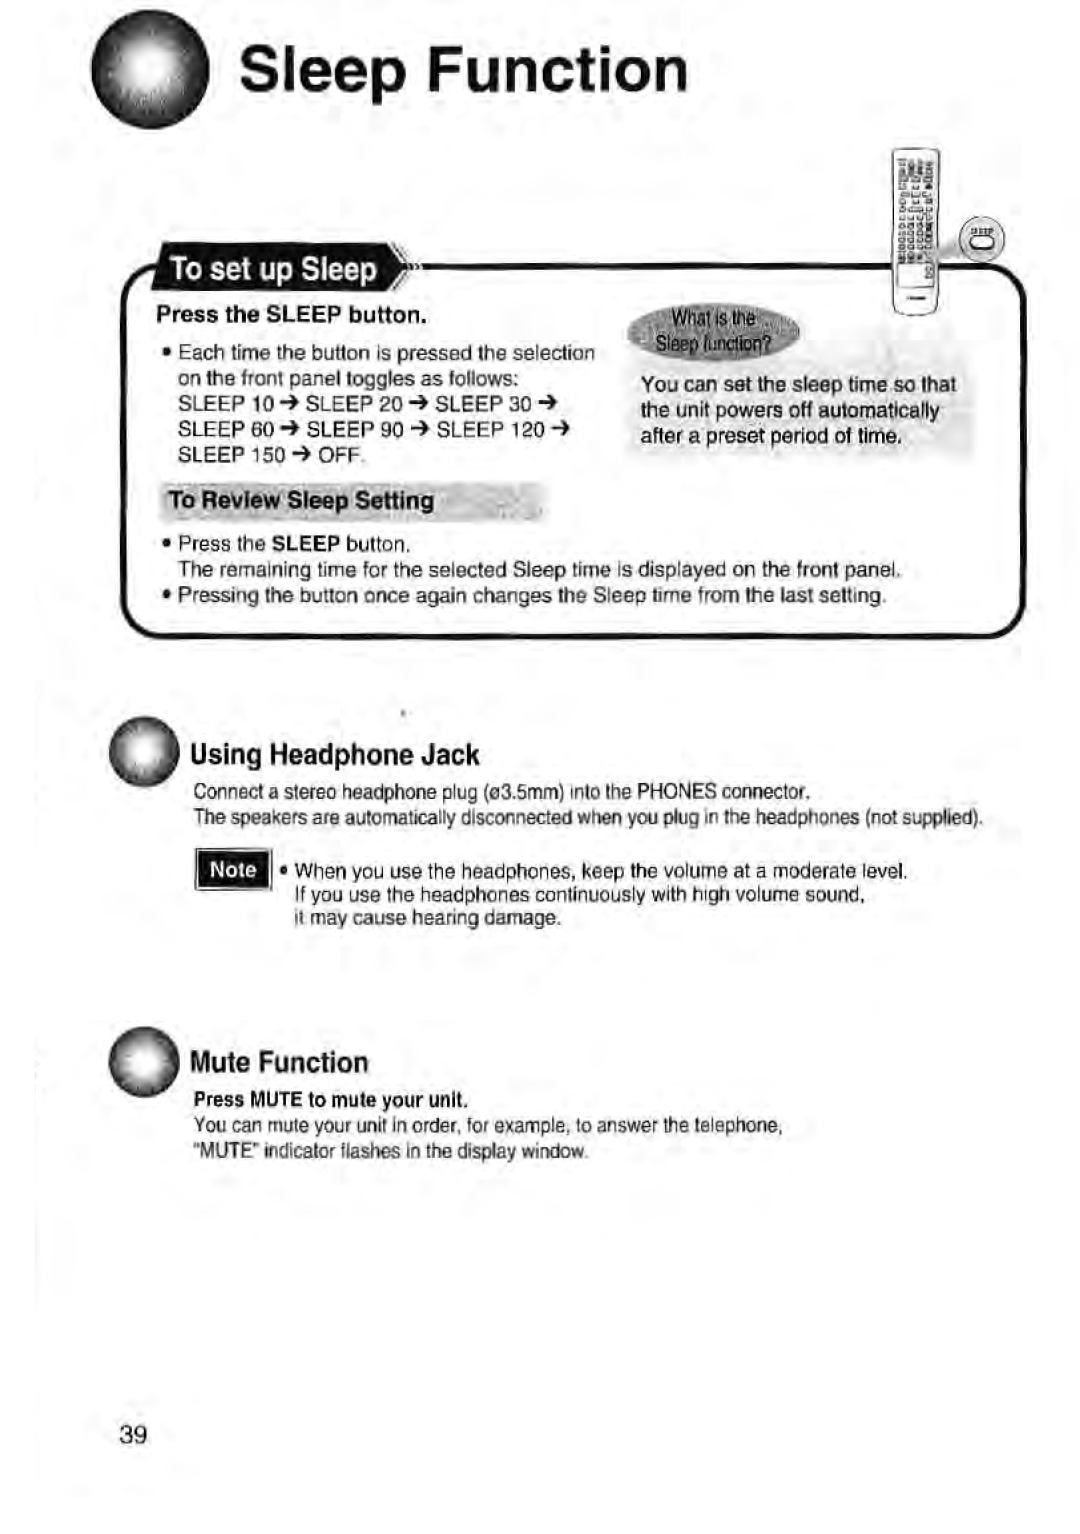 Toshiba SD-43HK Sleep Function, To set up Sleep, Using Headphone Jack, Q Mute Function, it may cause hearing damage 